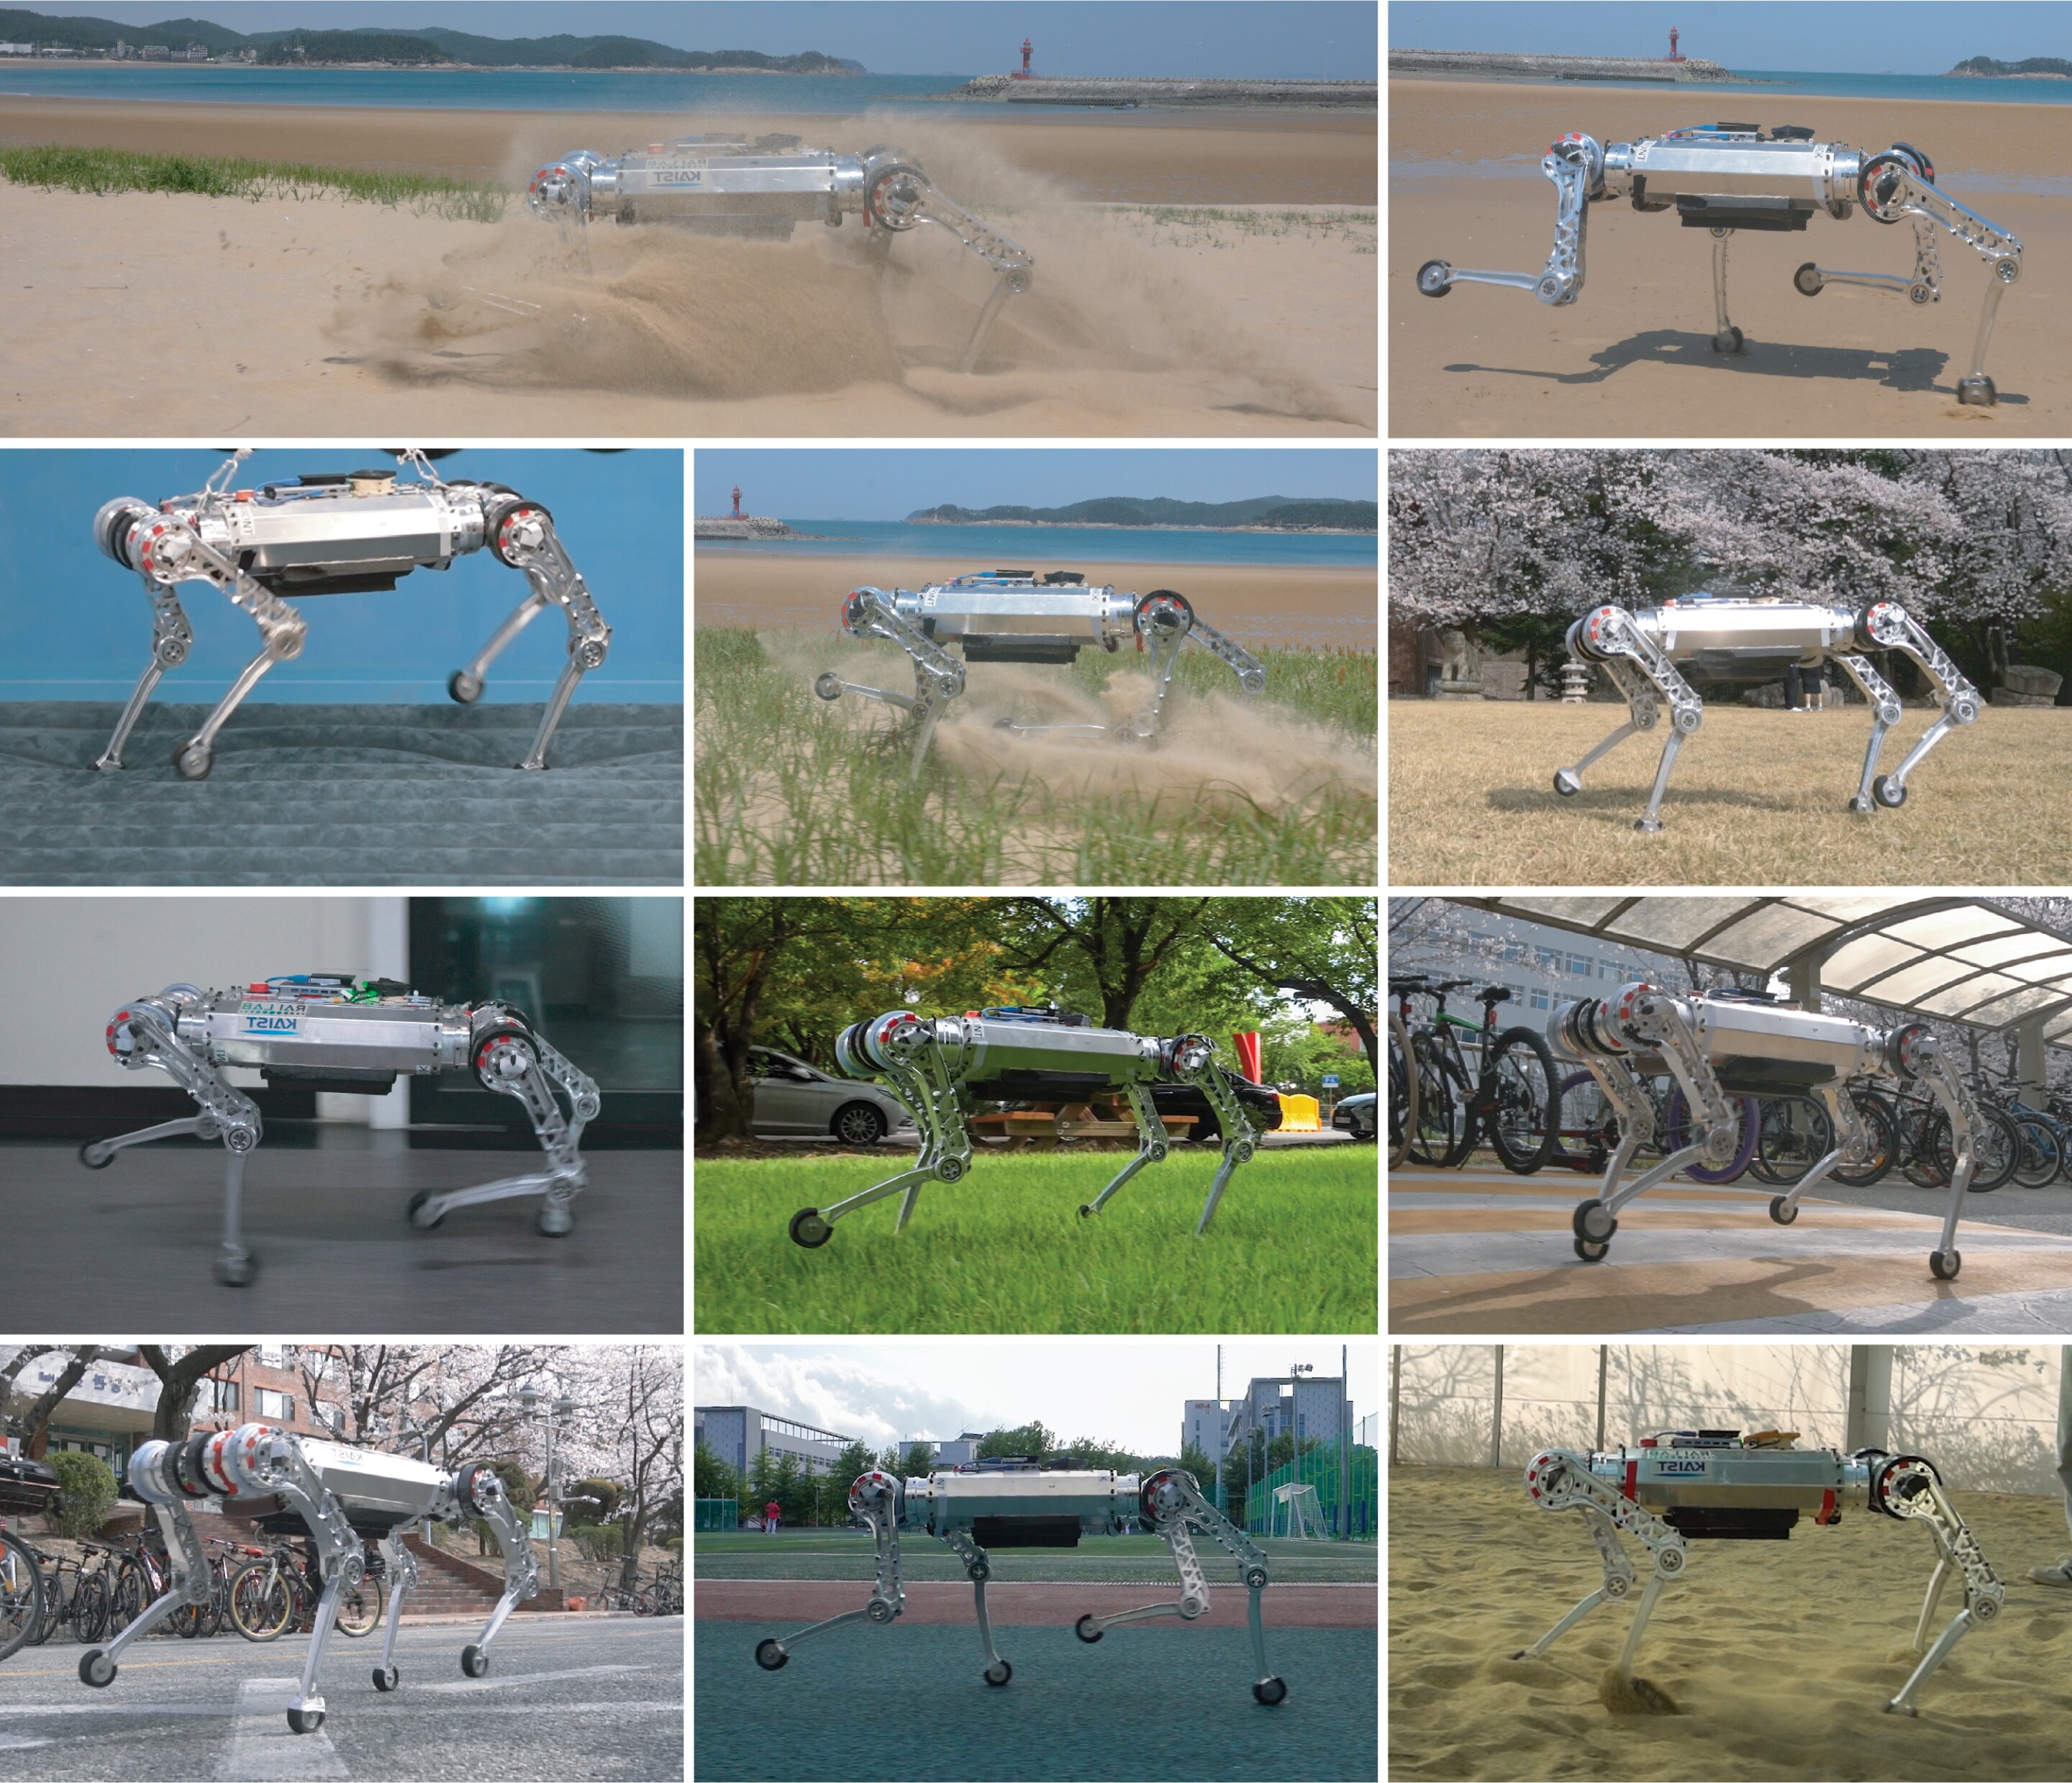 RaiBo: A versatile robo-dog that runs through a sandy beach at 3 meters per second